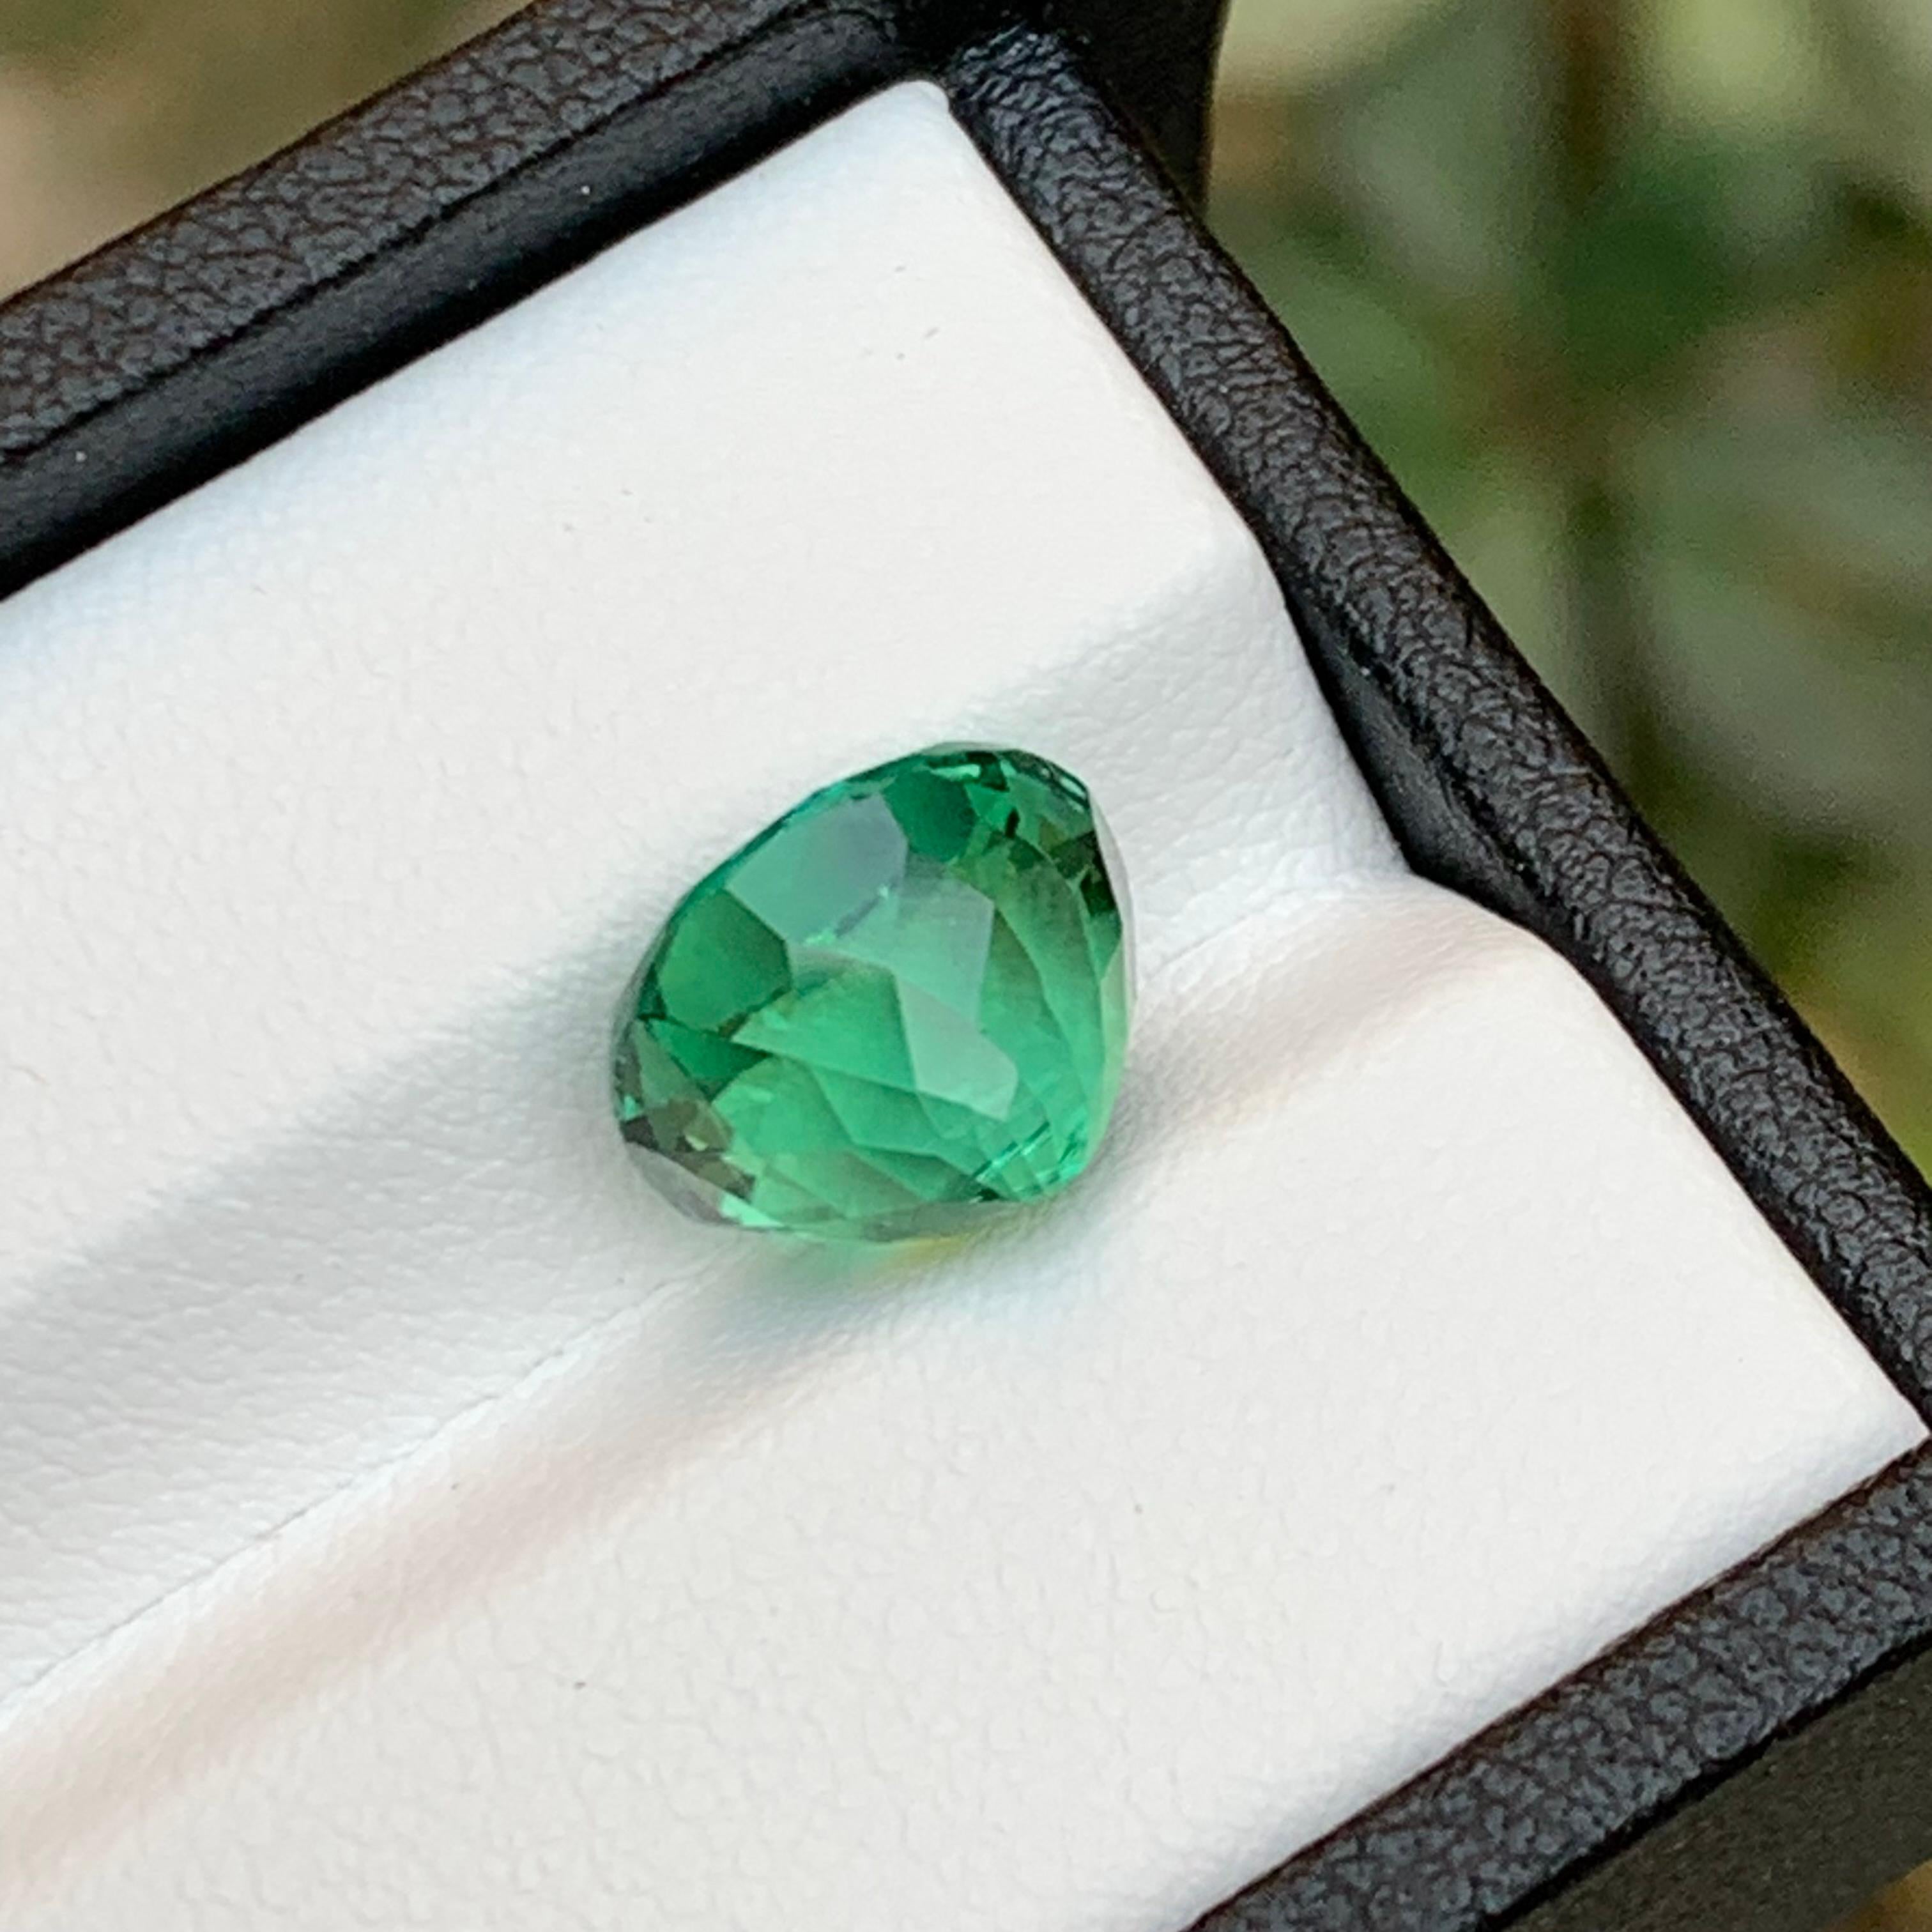 Rare tourmaline naturelle vert bleuté taille coussin fantaisie, 5,50 carats en vente 1